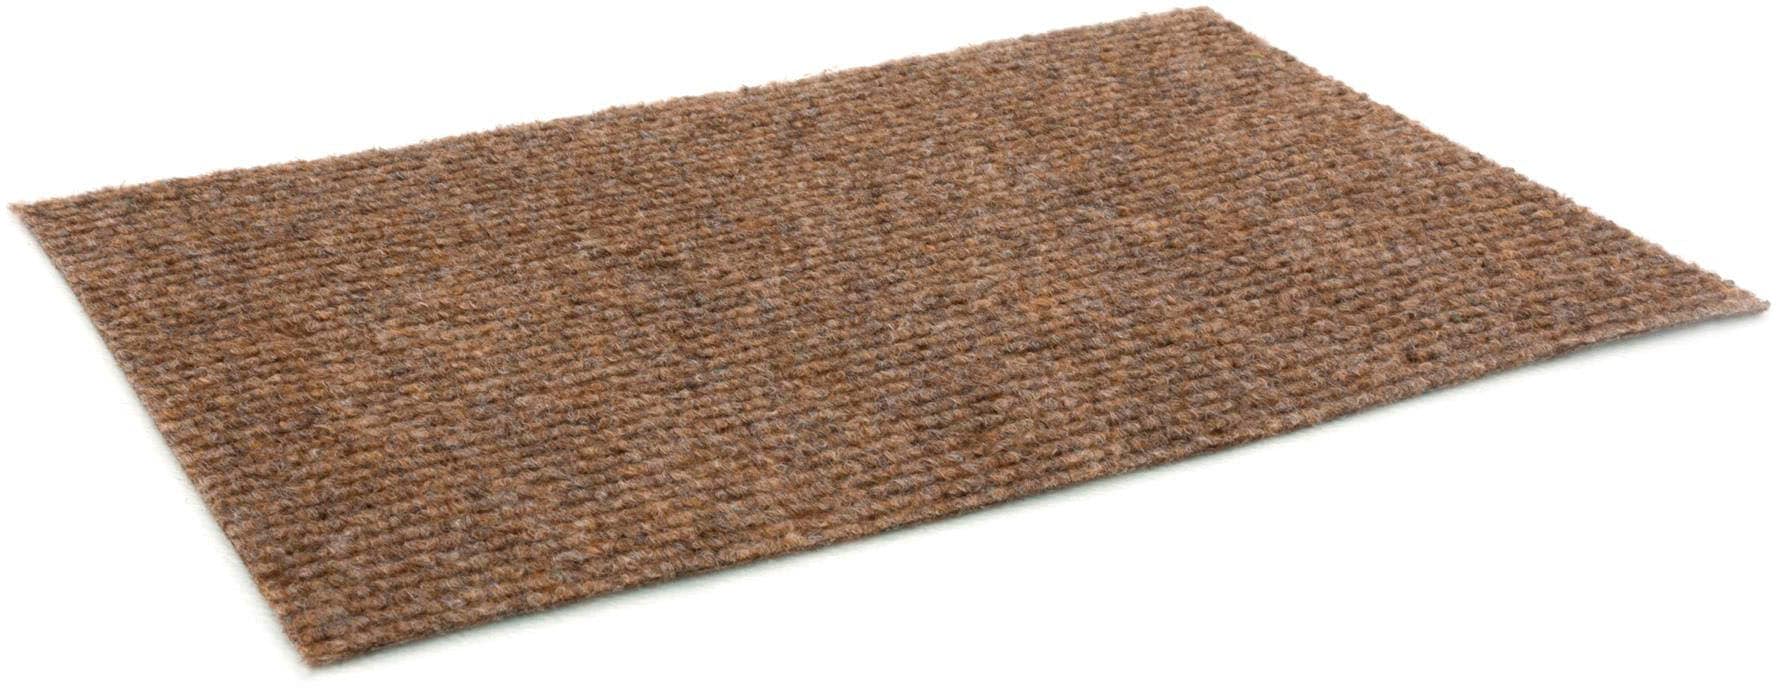 Teppich-Boden Rips Malta B1 - Braun, 2,00m x 8,00m Rips-Nadelfilz, Schwer Entflammbar, Höhe ca.2mm, Gerippter Bodenbelag für Events und Messen